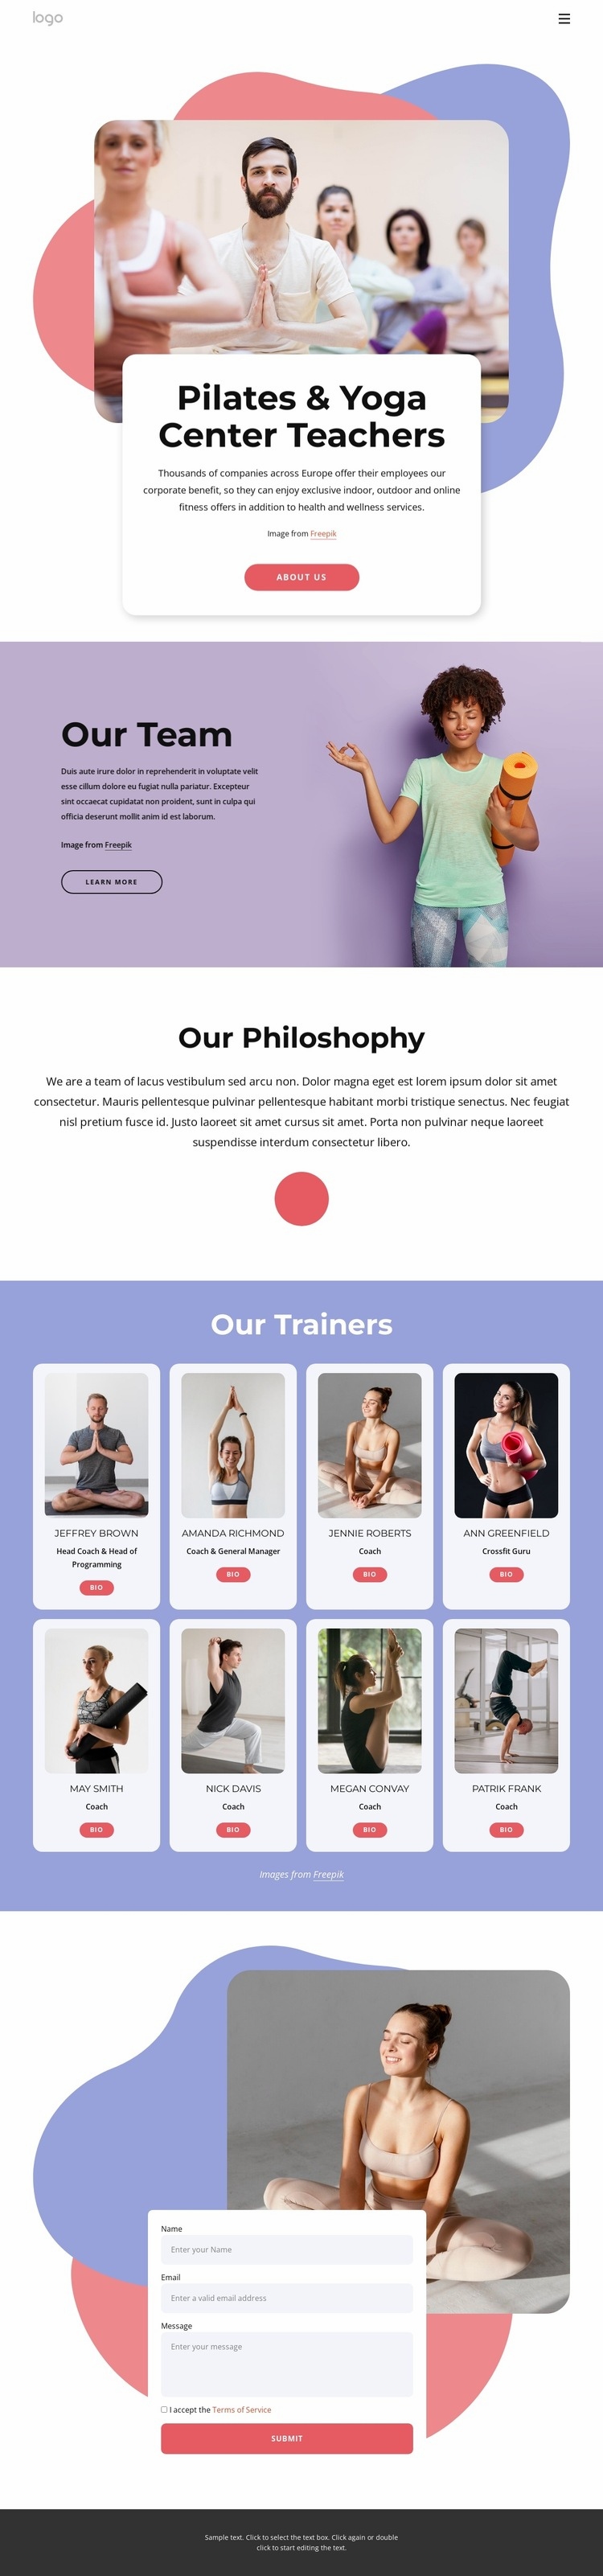 Pilates and yoga center teachers Web Page Design